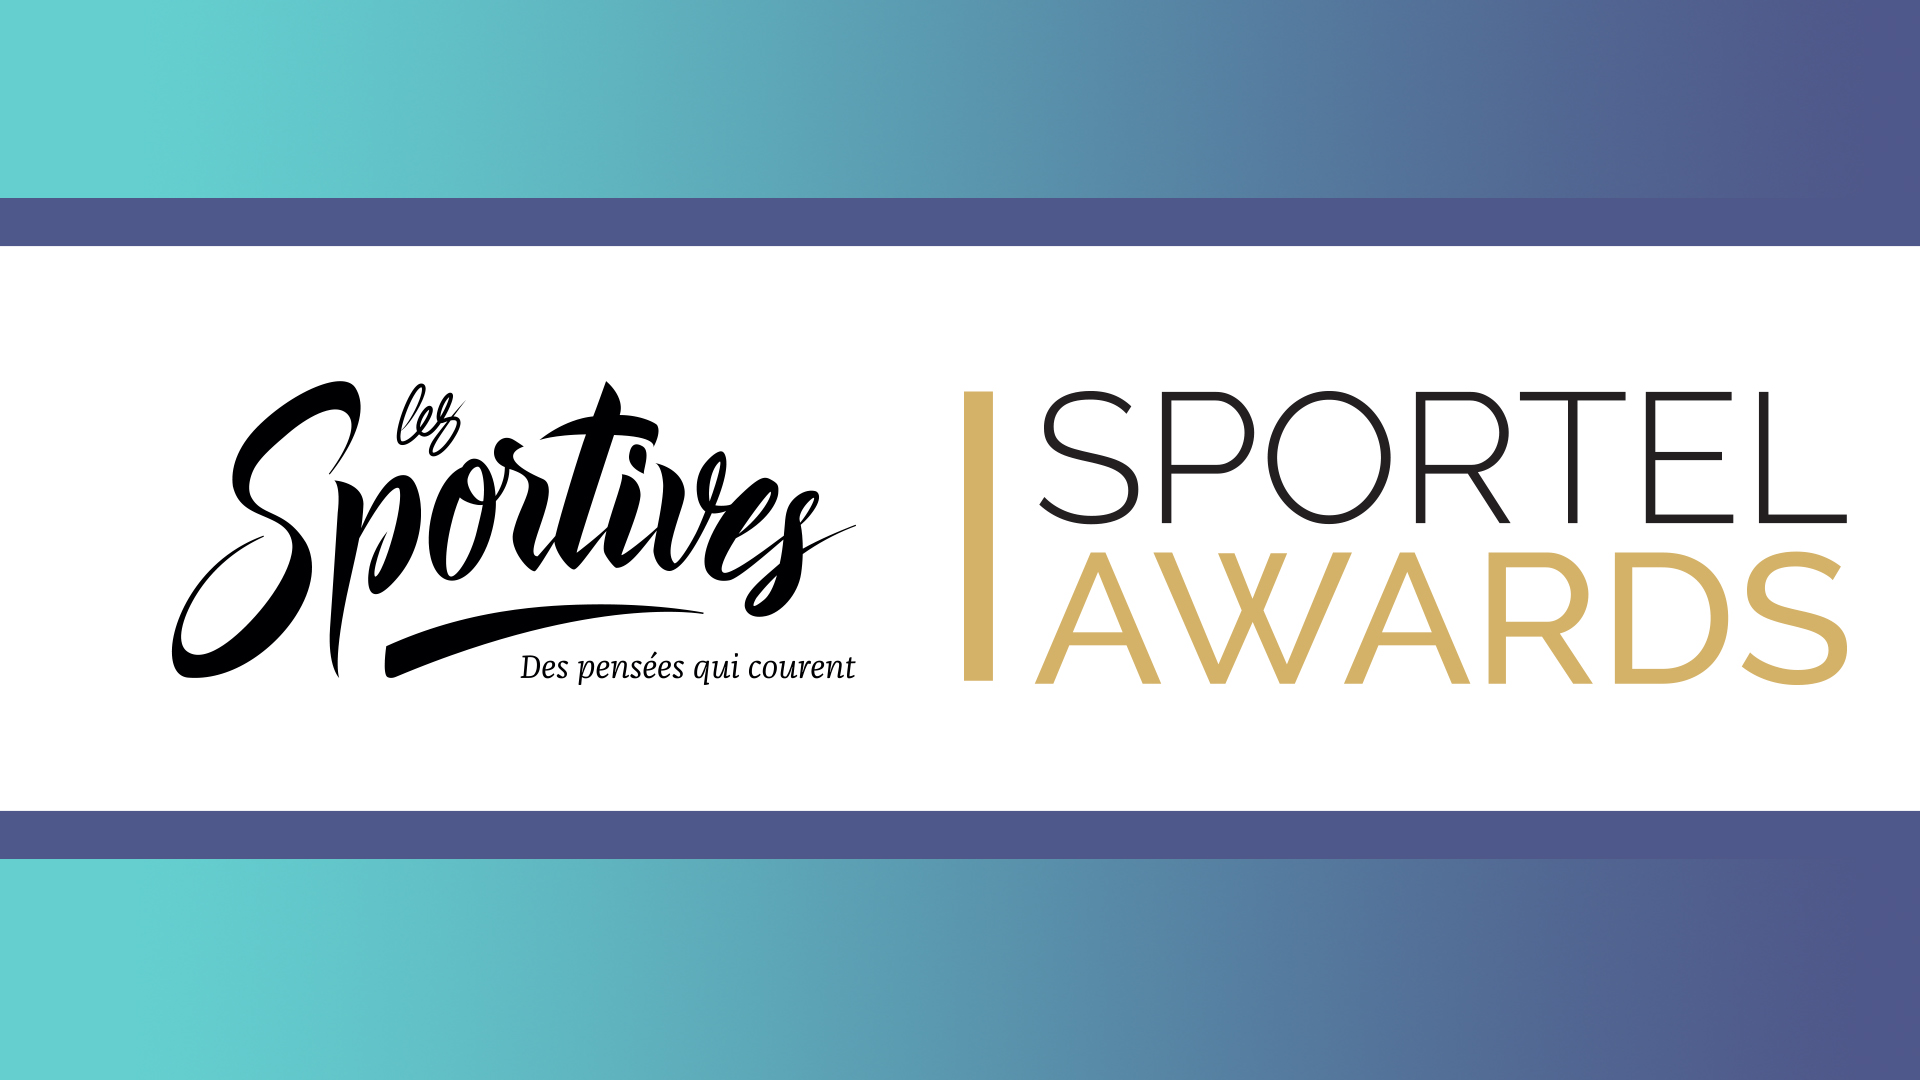 annonce partenariat Sportel Awards